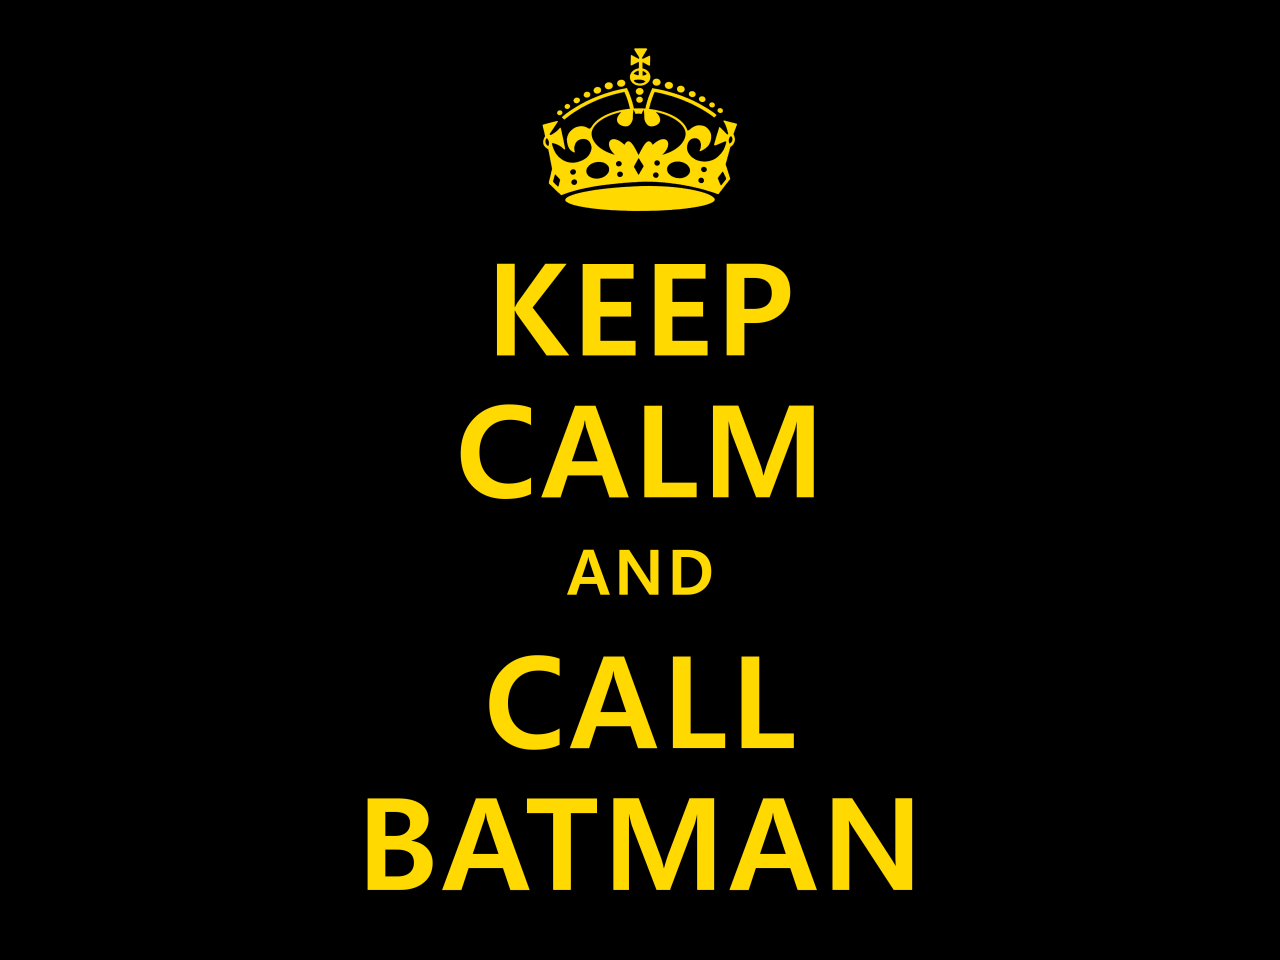 http://1.bp.blogspot.com/-ulQZIylgCgk/UPkziCENikI/AAAAAAAAAJw/ETNO5MeqBwU/s1600/keep_calm_and_call_batman_by_koboot-d31267o.jpg